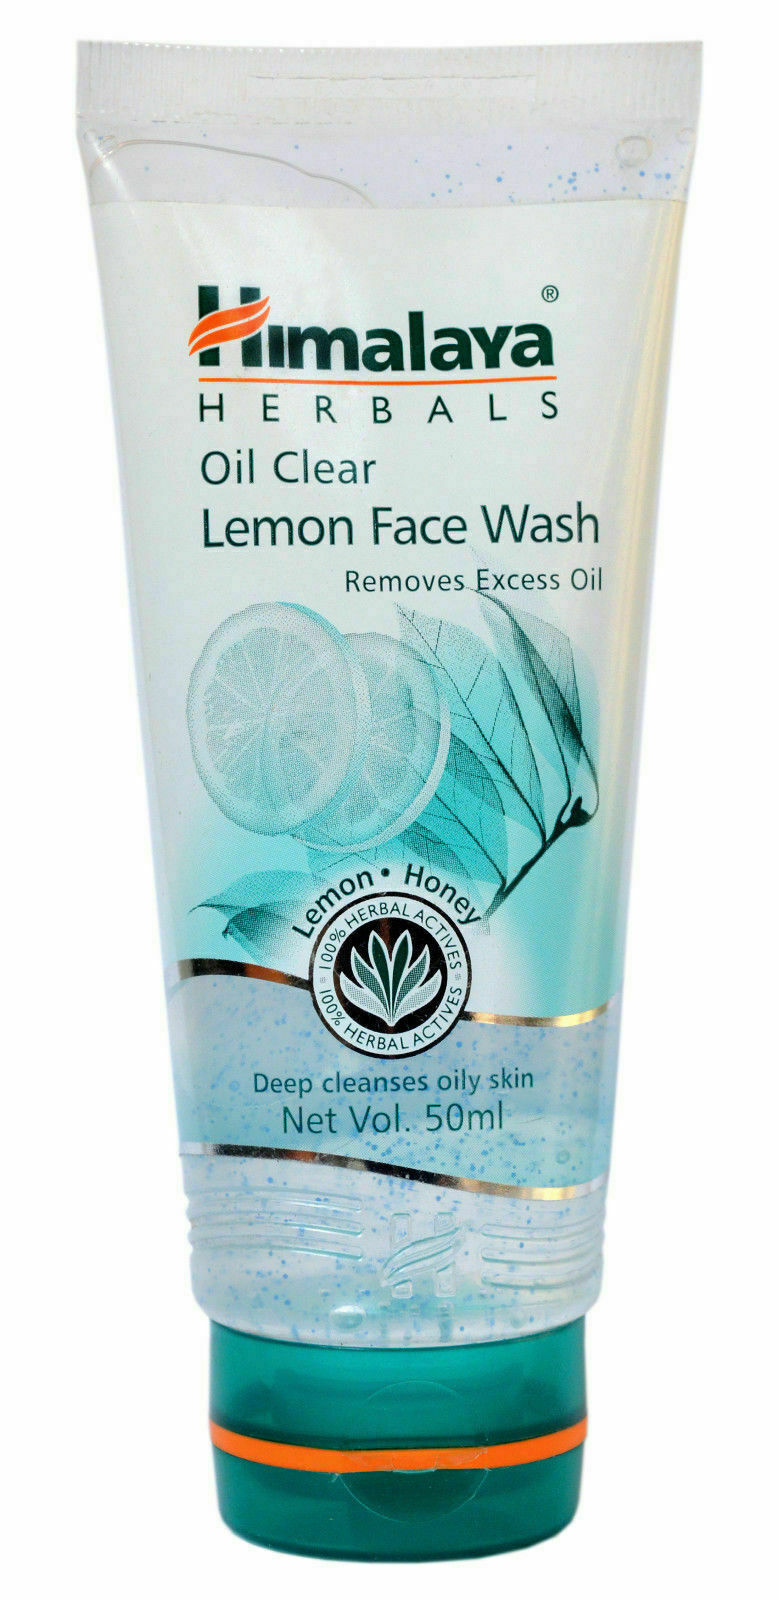 Oil Clear LEMON FACE WASH, Himalaya (Средство для умывания С ЛИМОНОМ для жирной кожи, Хималайя), 50 мл.